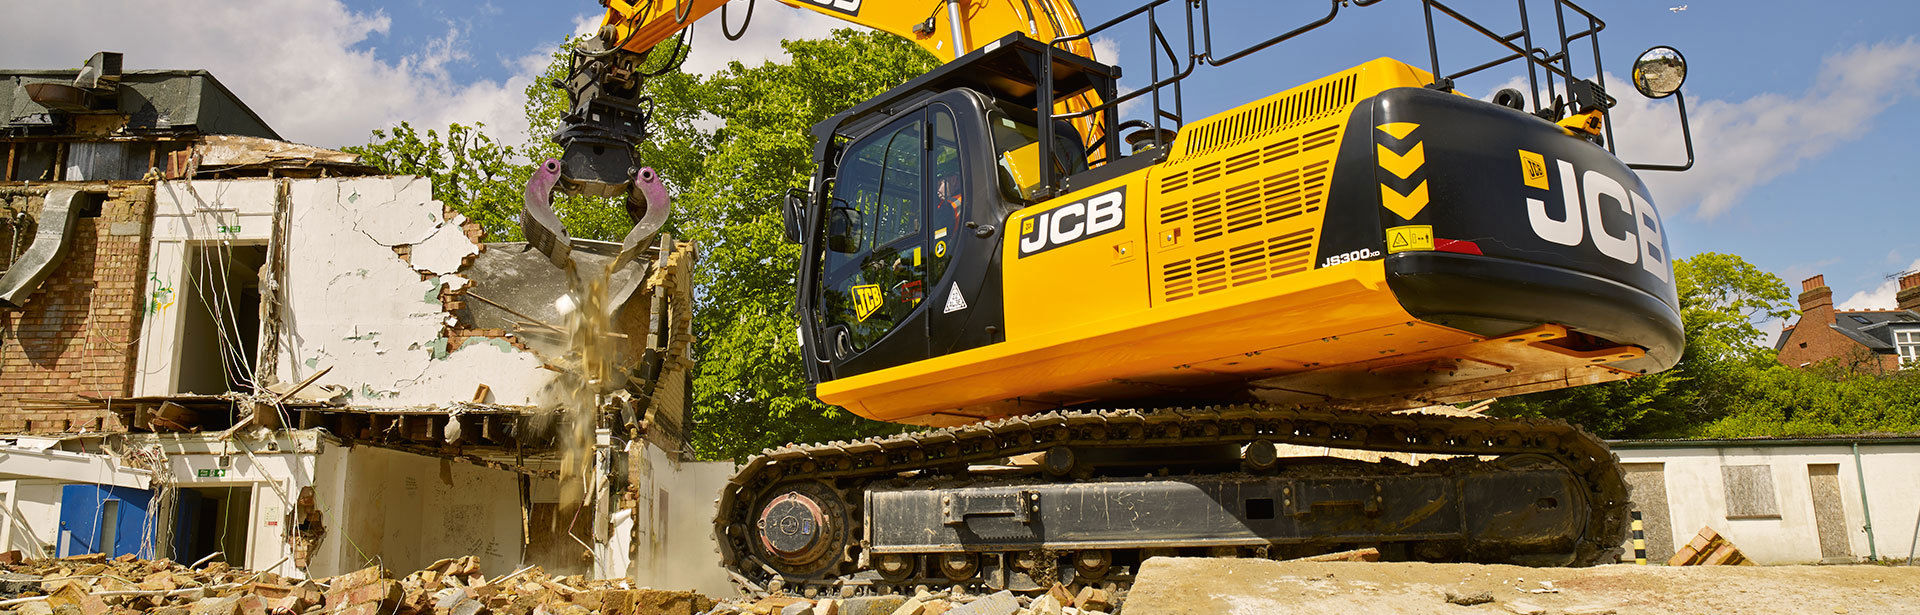 JCB Tracked Excavator demolishing an old building